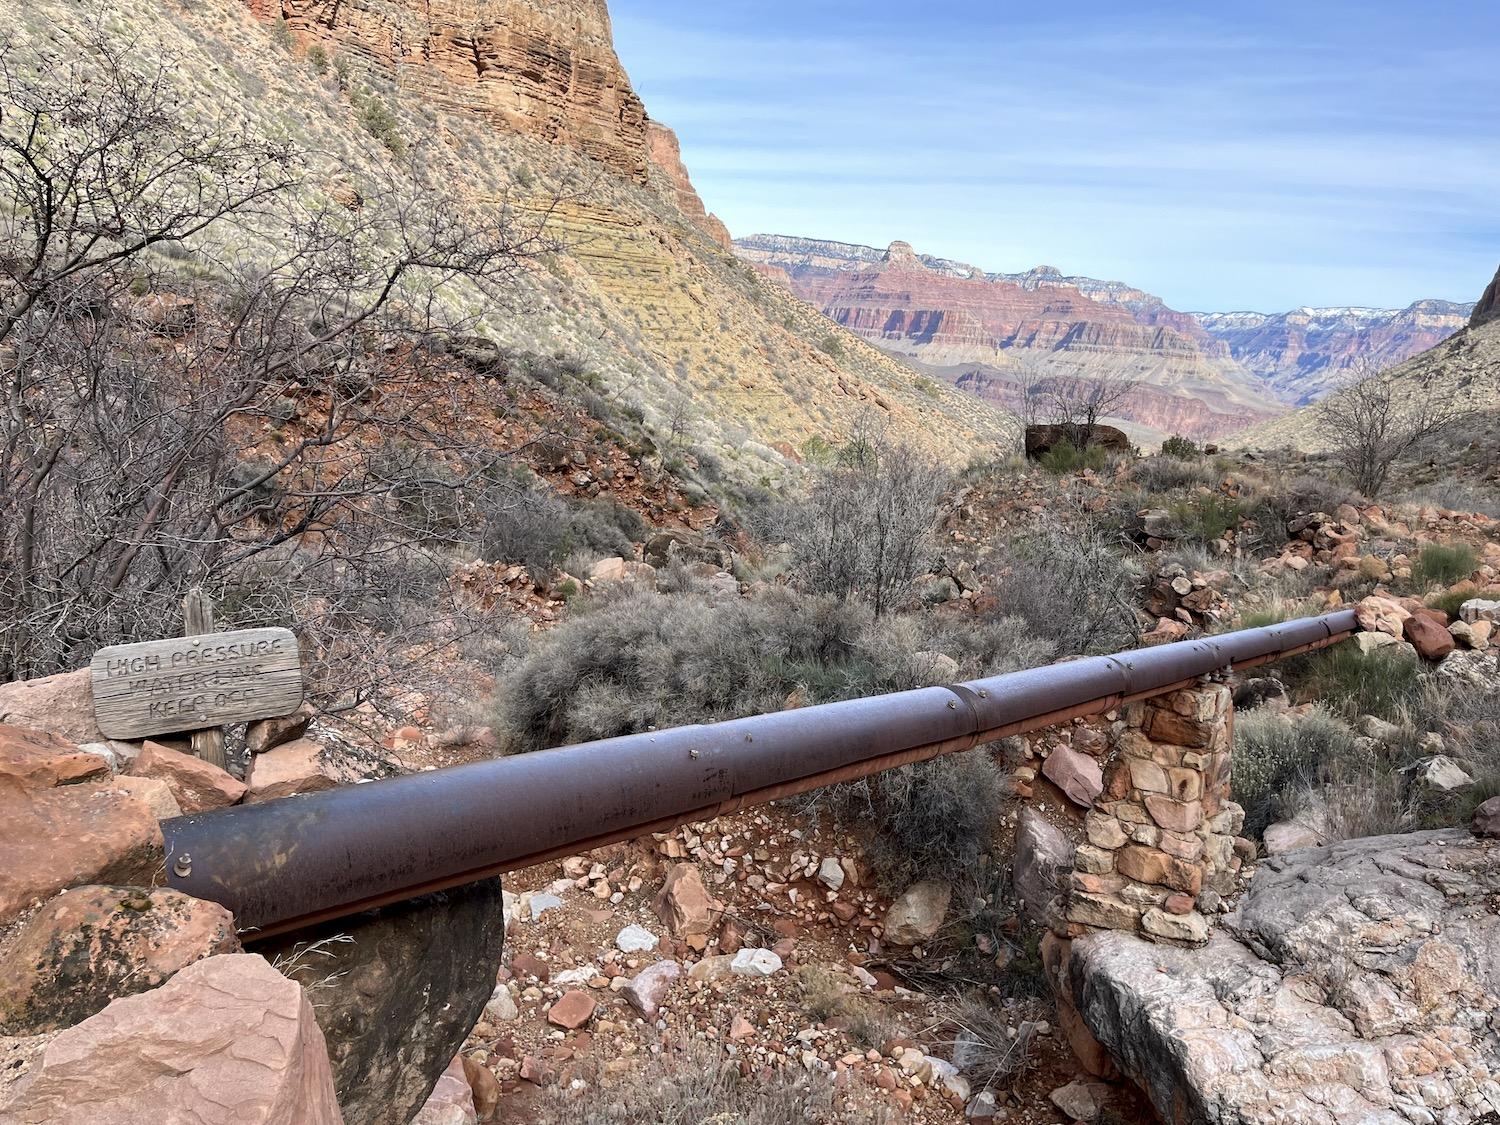 The Transcanyon water line at Grand Canyon National Park/Lori Sonken